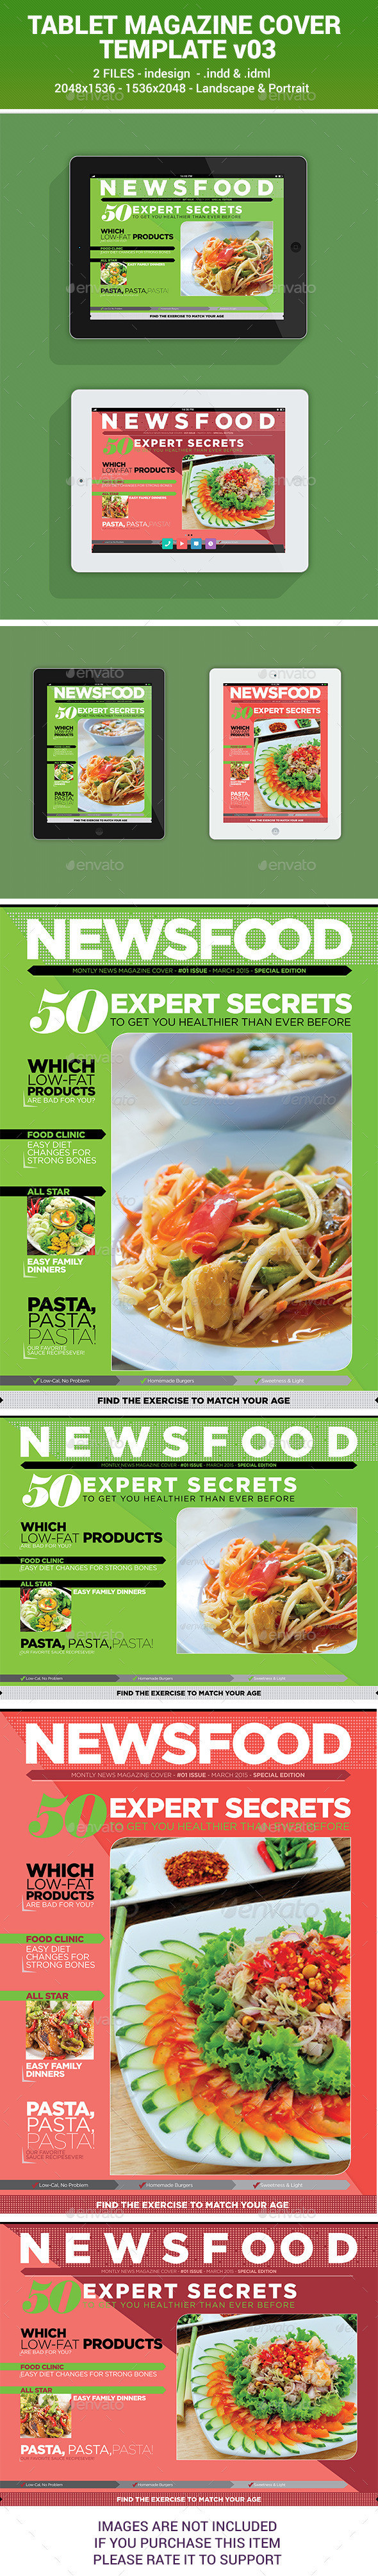 Tablet magazine cover portrait landscape food v03e 590 prew